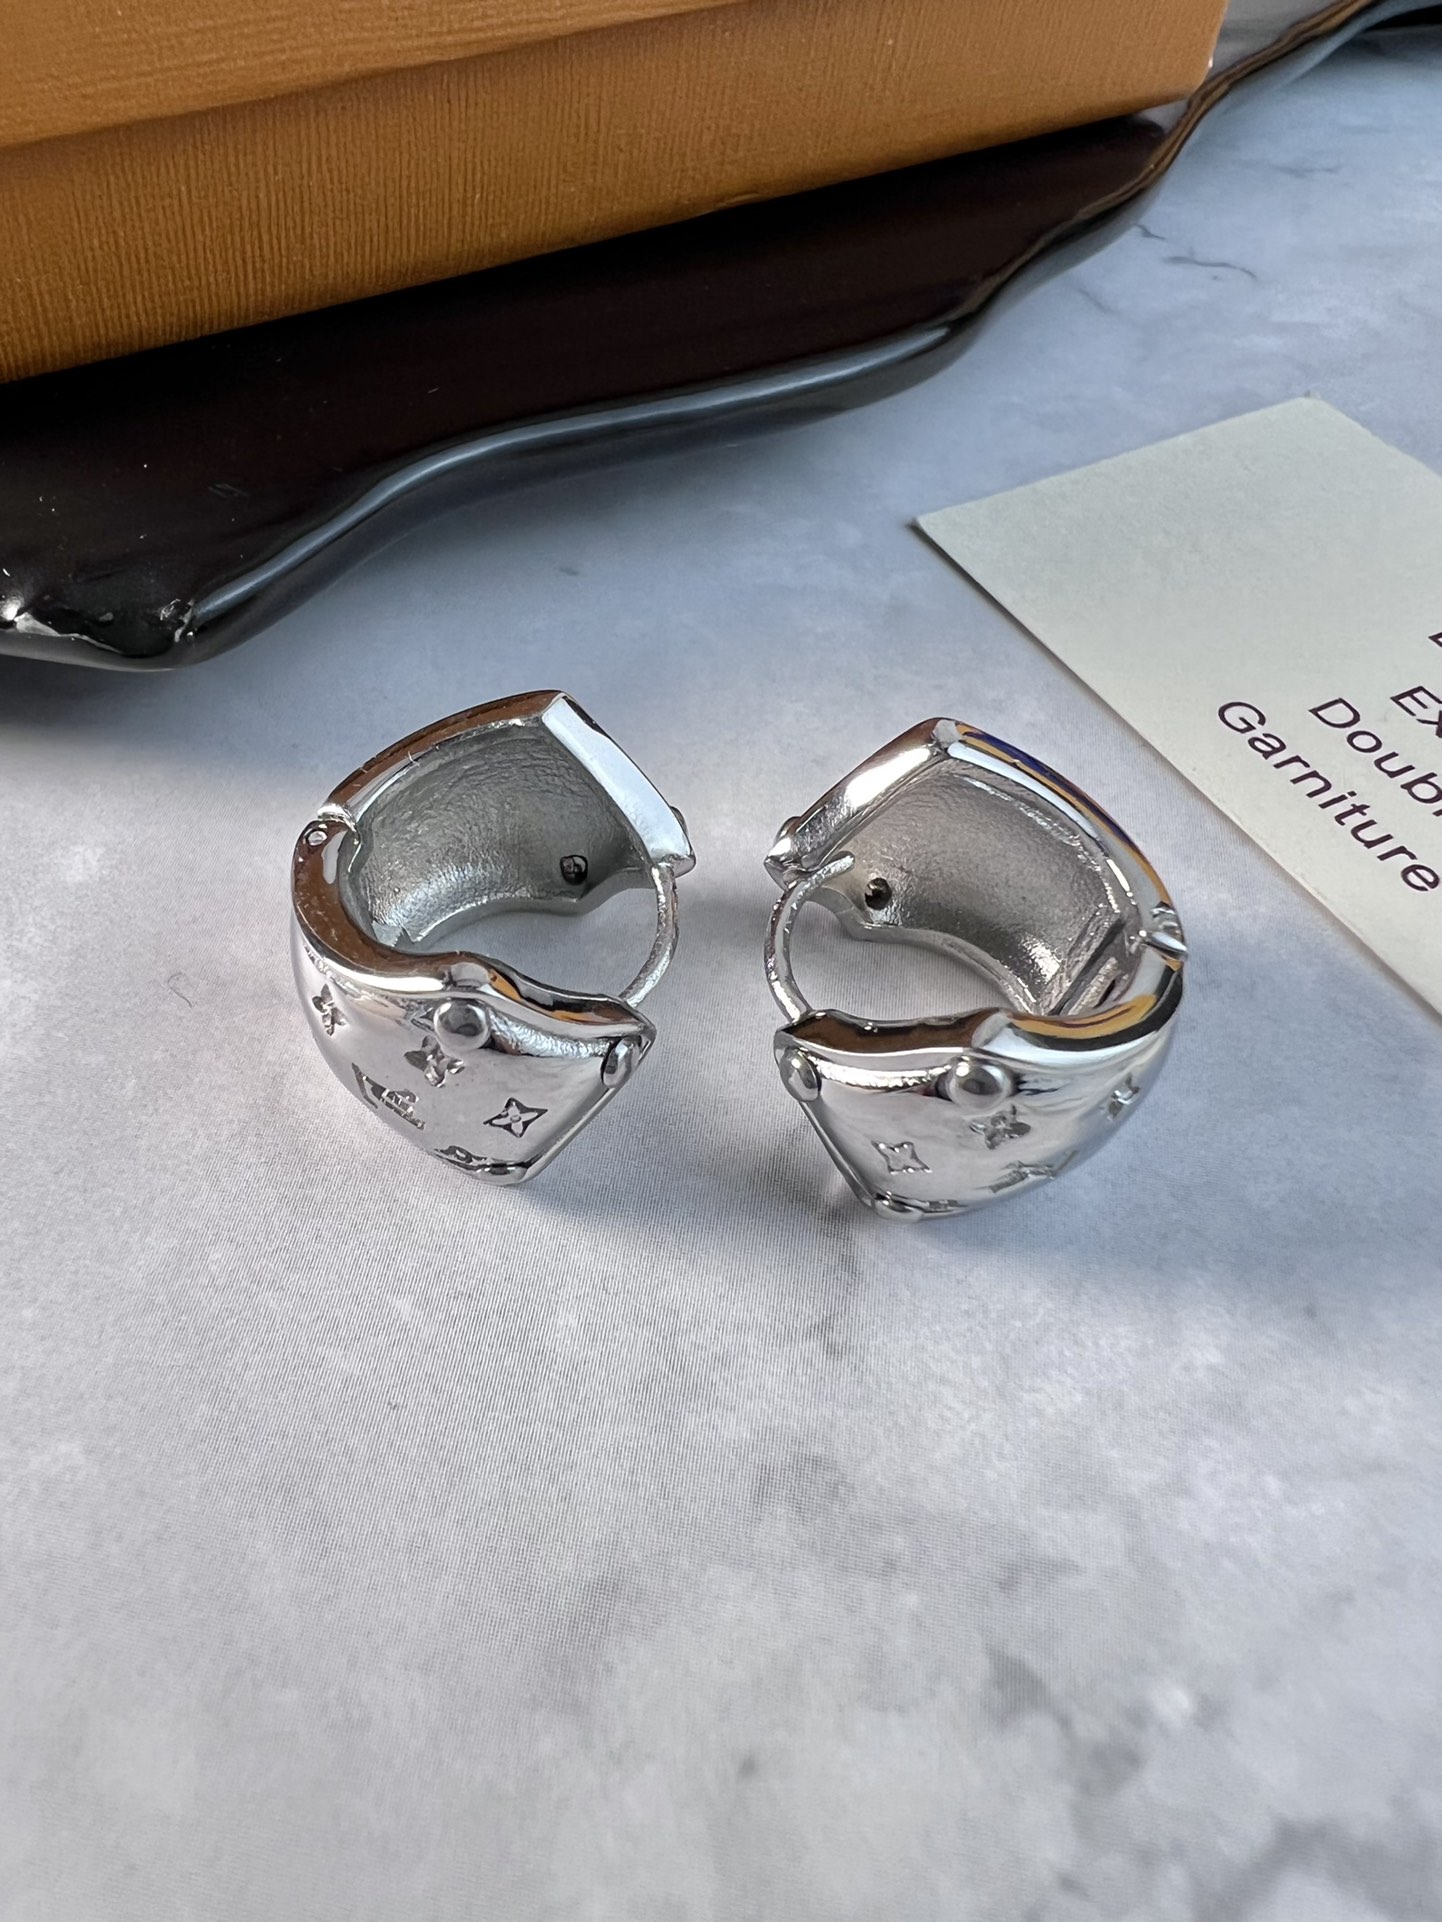 LV耳钉本款Nanogram耳环为抛光金属环镂刻Monogram图案致意品牌传承的同时见证精湛工艺